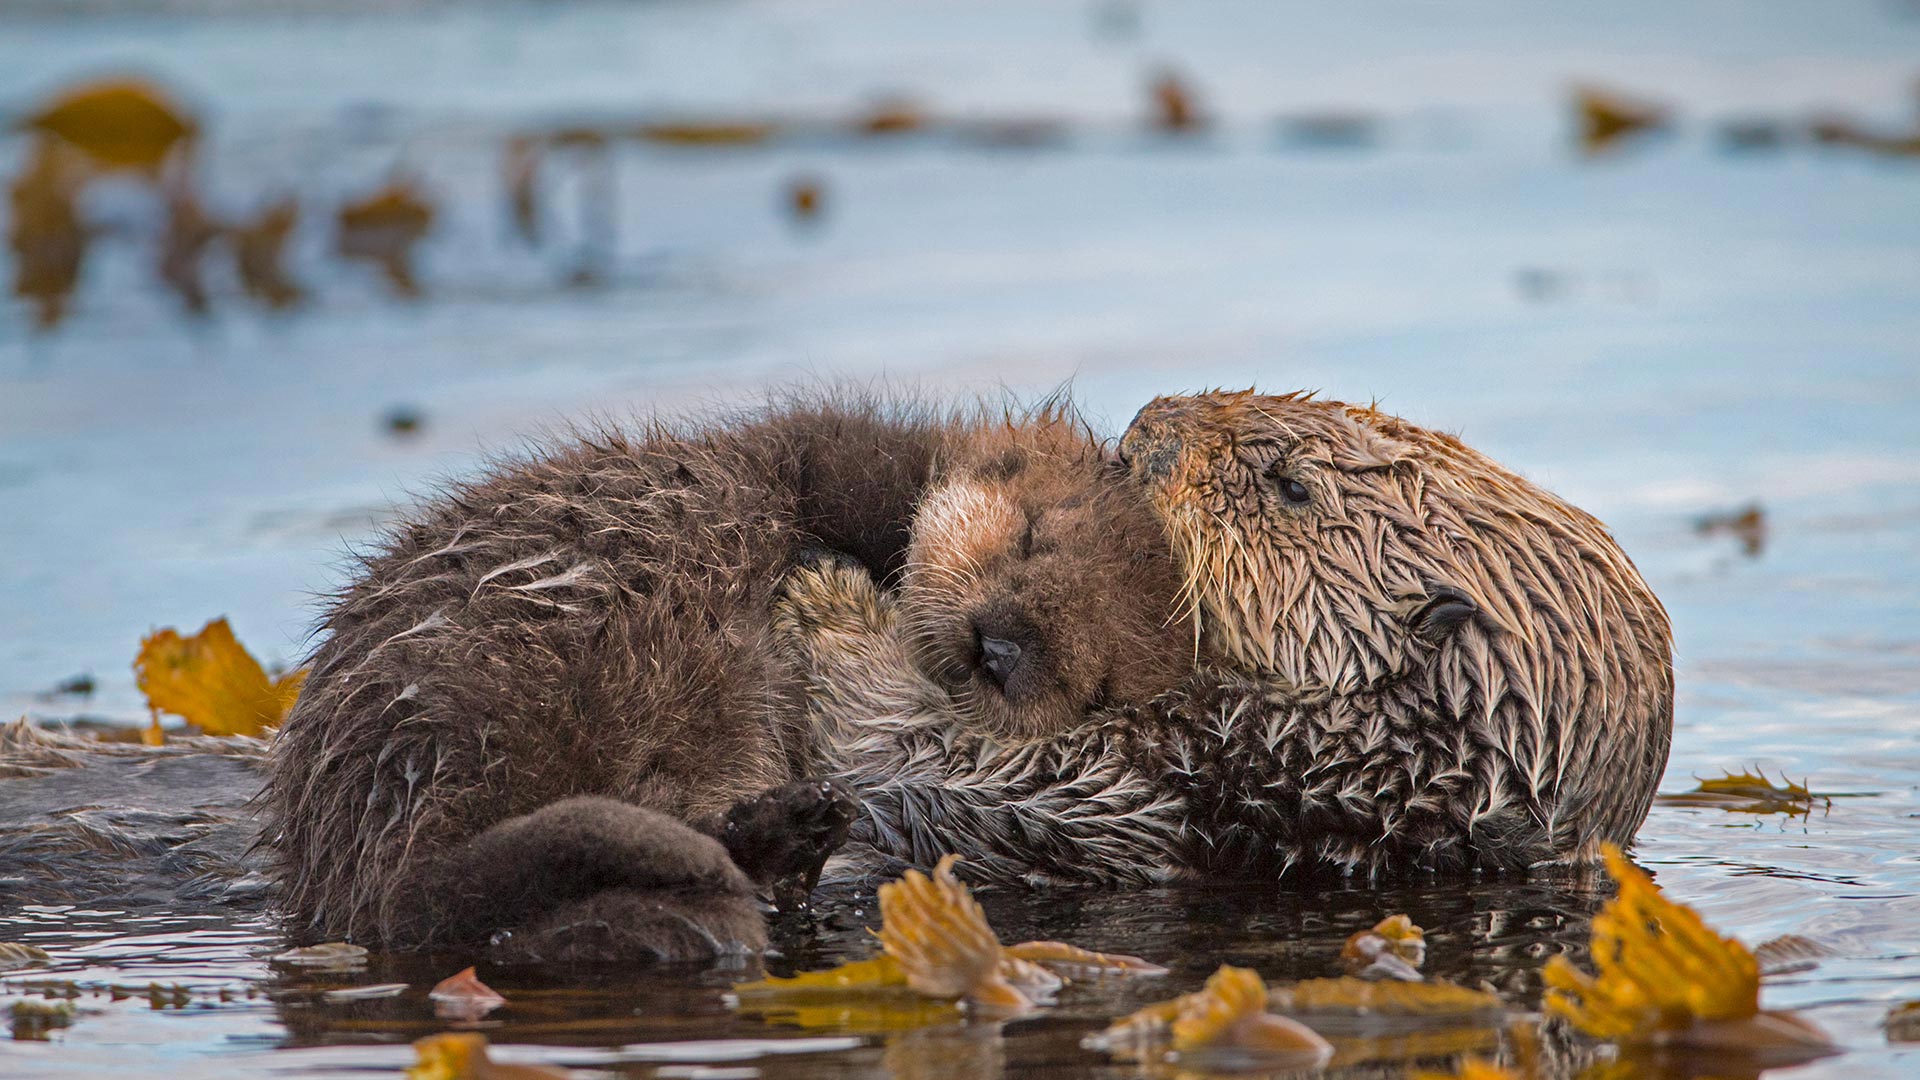 Sea otter mother and newborn pup in Monterey Bay, California - Suzi Eszterhas